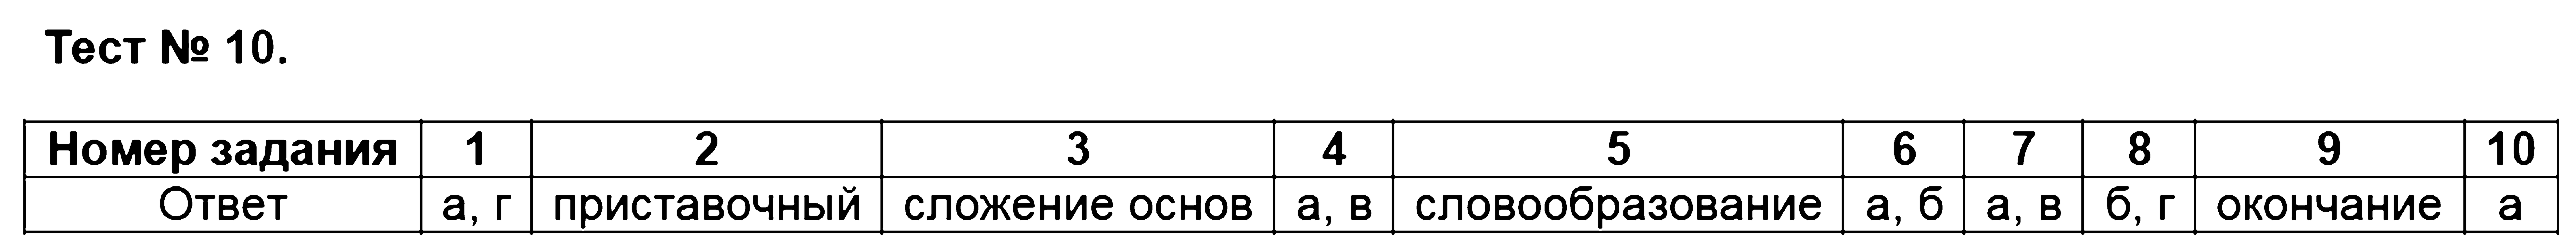 ГДЗ Русский язык 6 класс - Тест 10